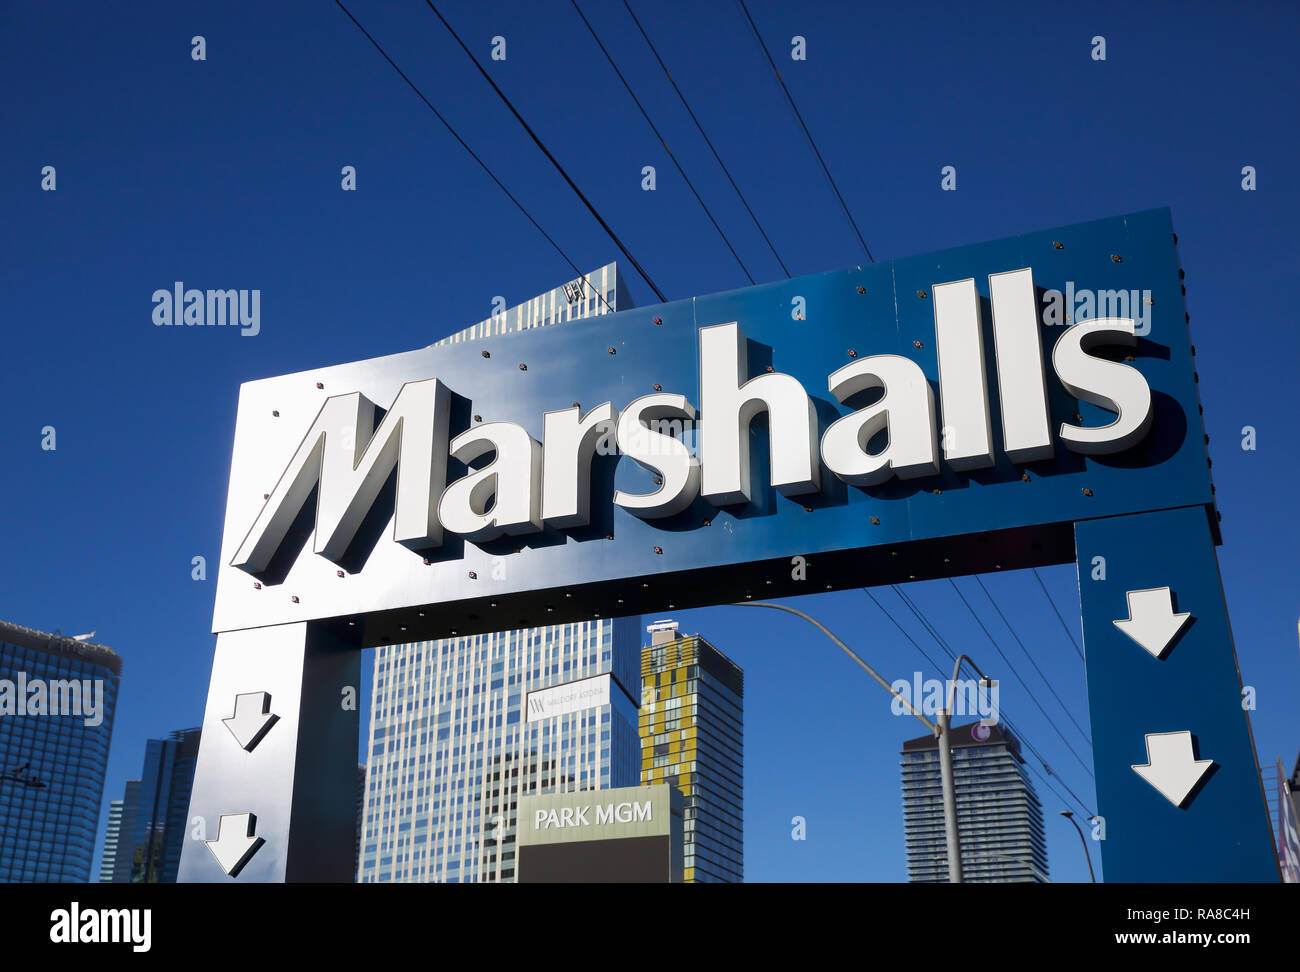 Marshalls department store sign in Las Vegas Stock Photo - Alamy